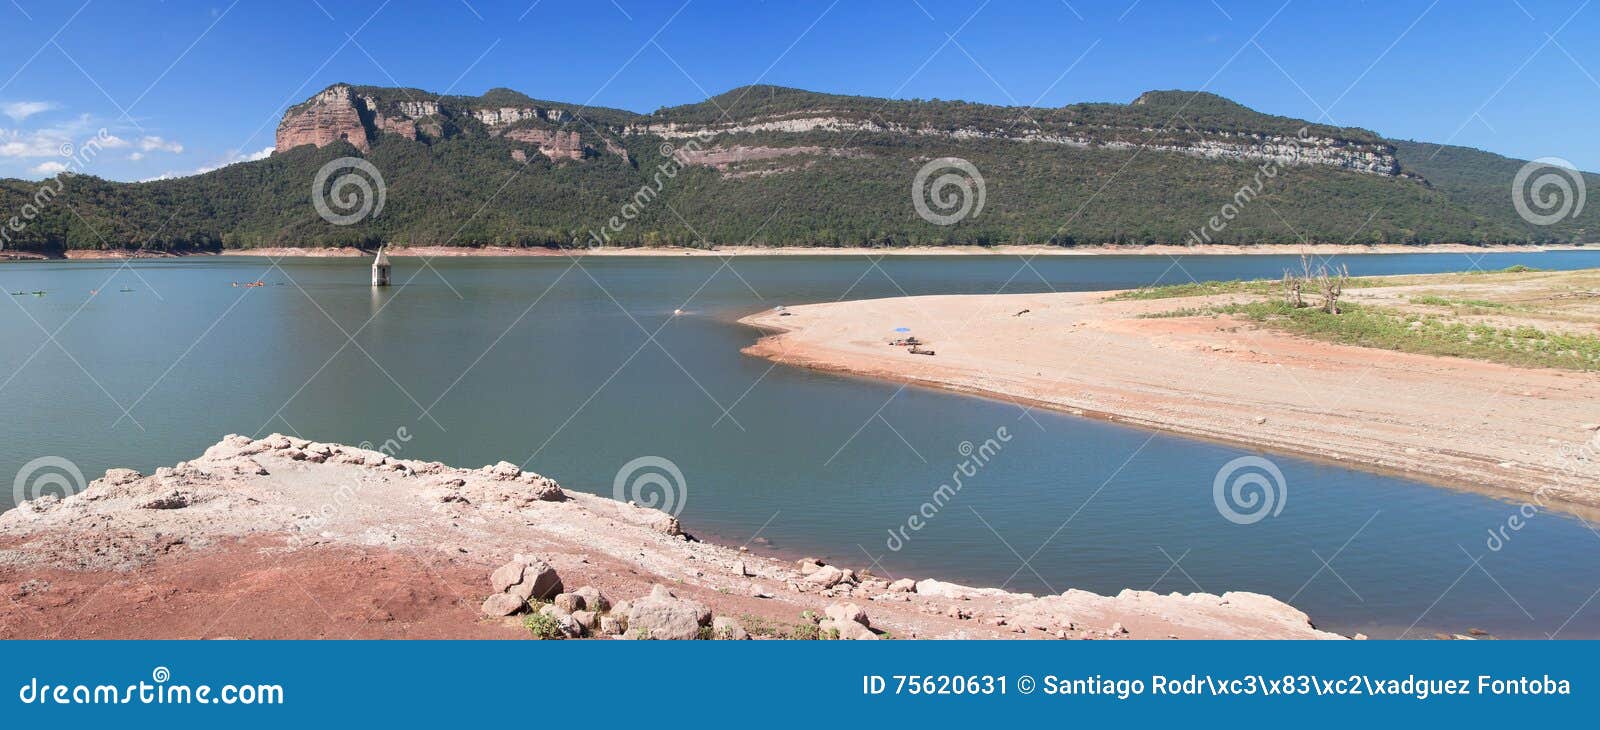 sau reservoir panorama